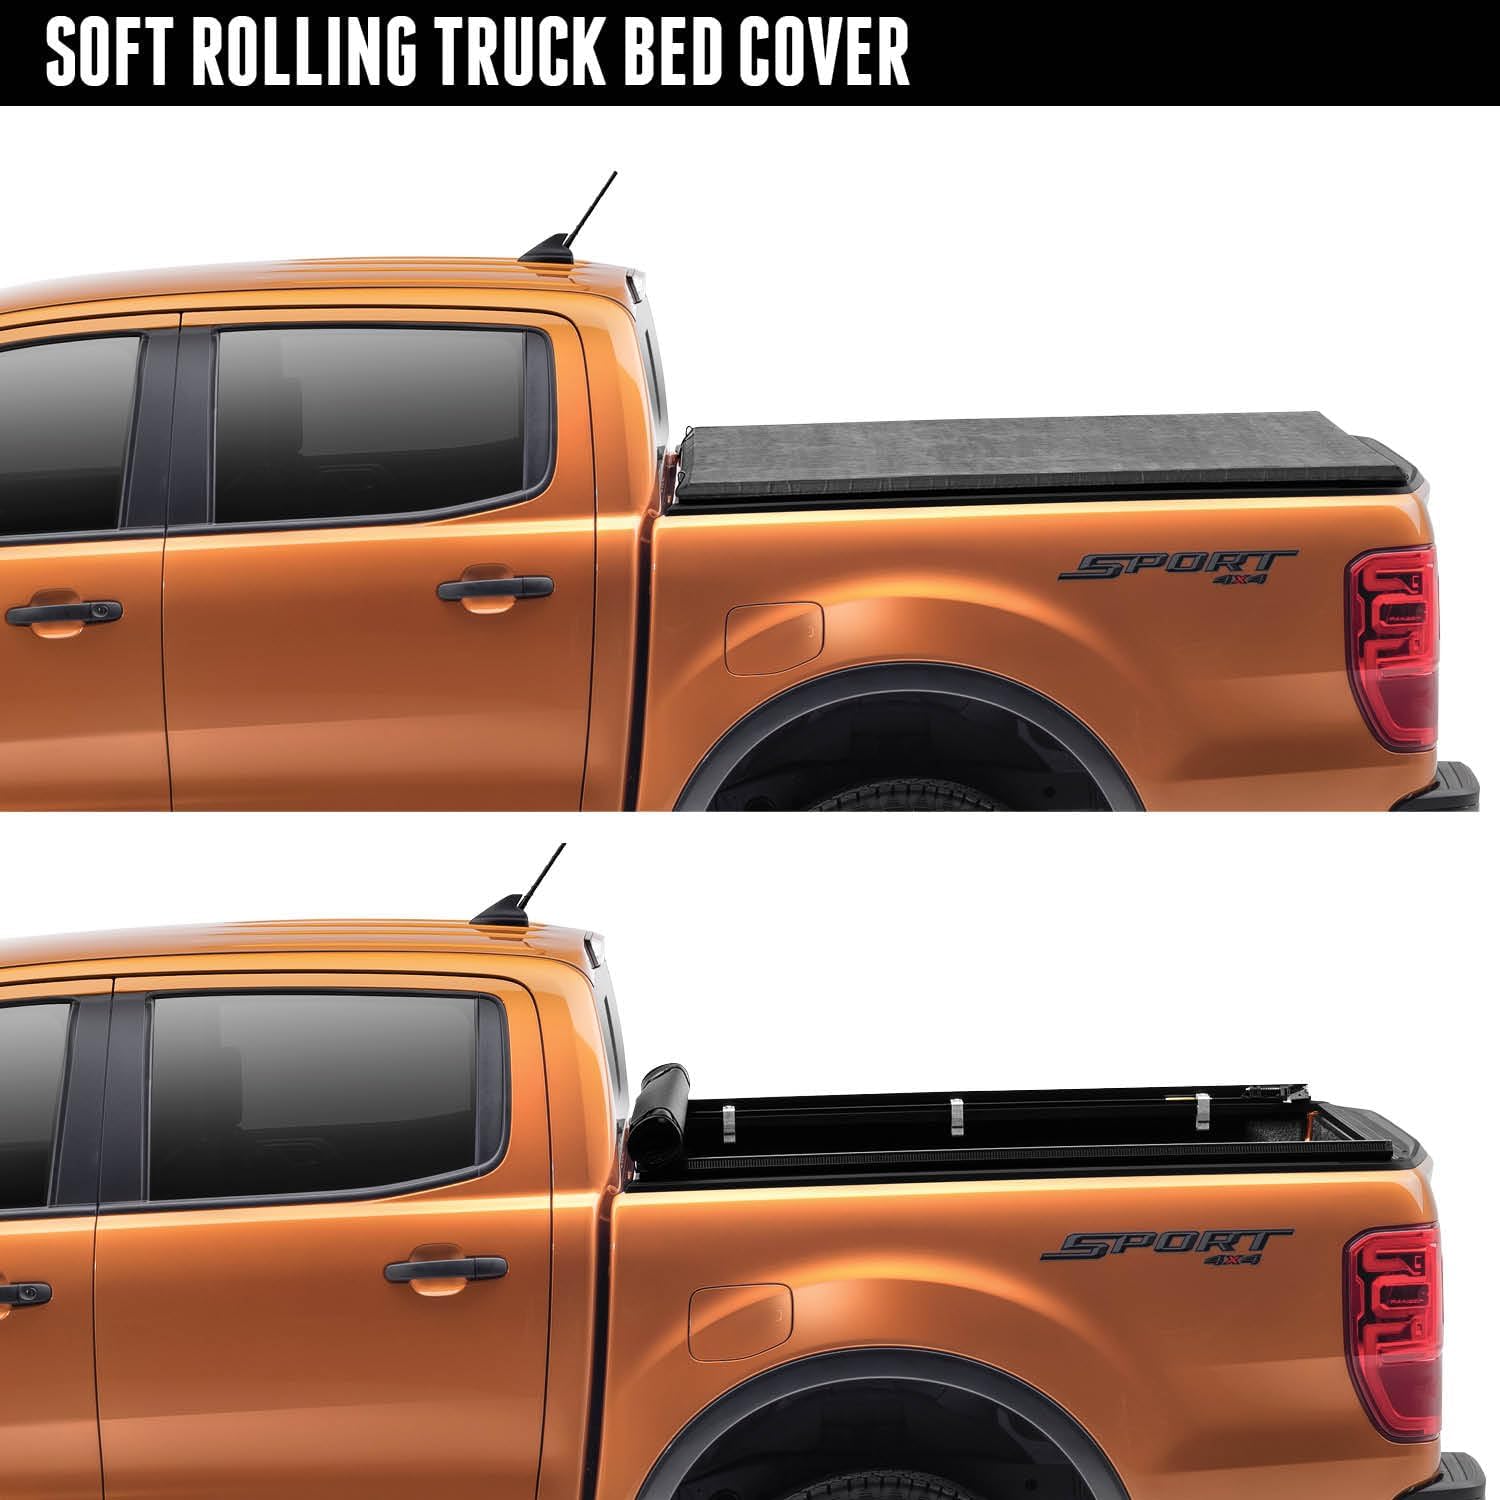 RealTruck TruXedo TruXport Soft Roll Up Truck Bed Tonneau Cover - $205